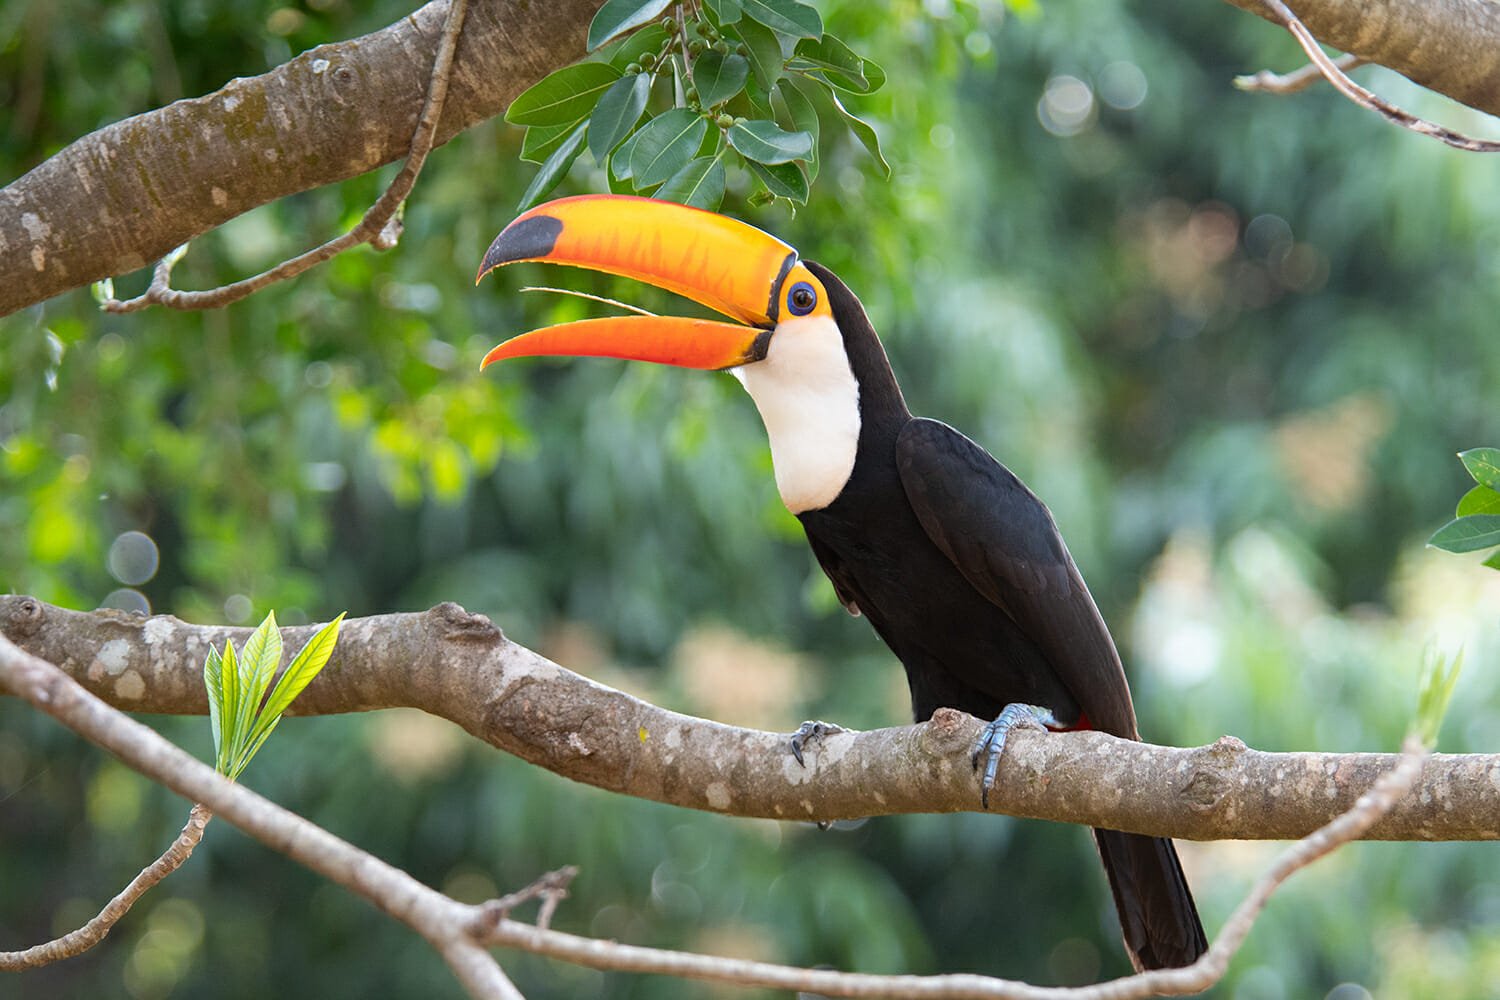 Toco toucan in Brazil